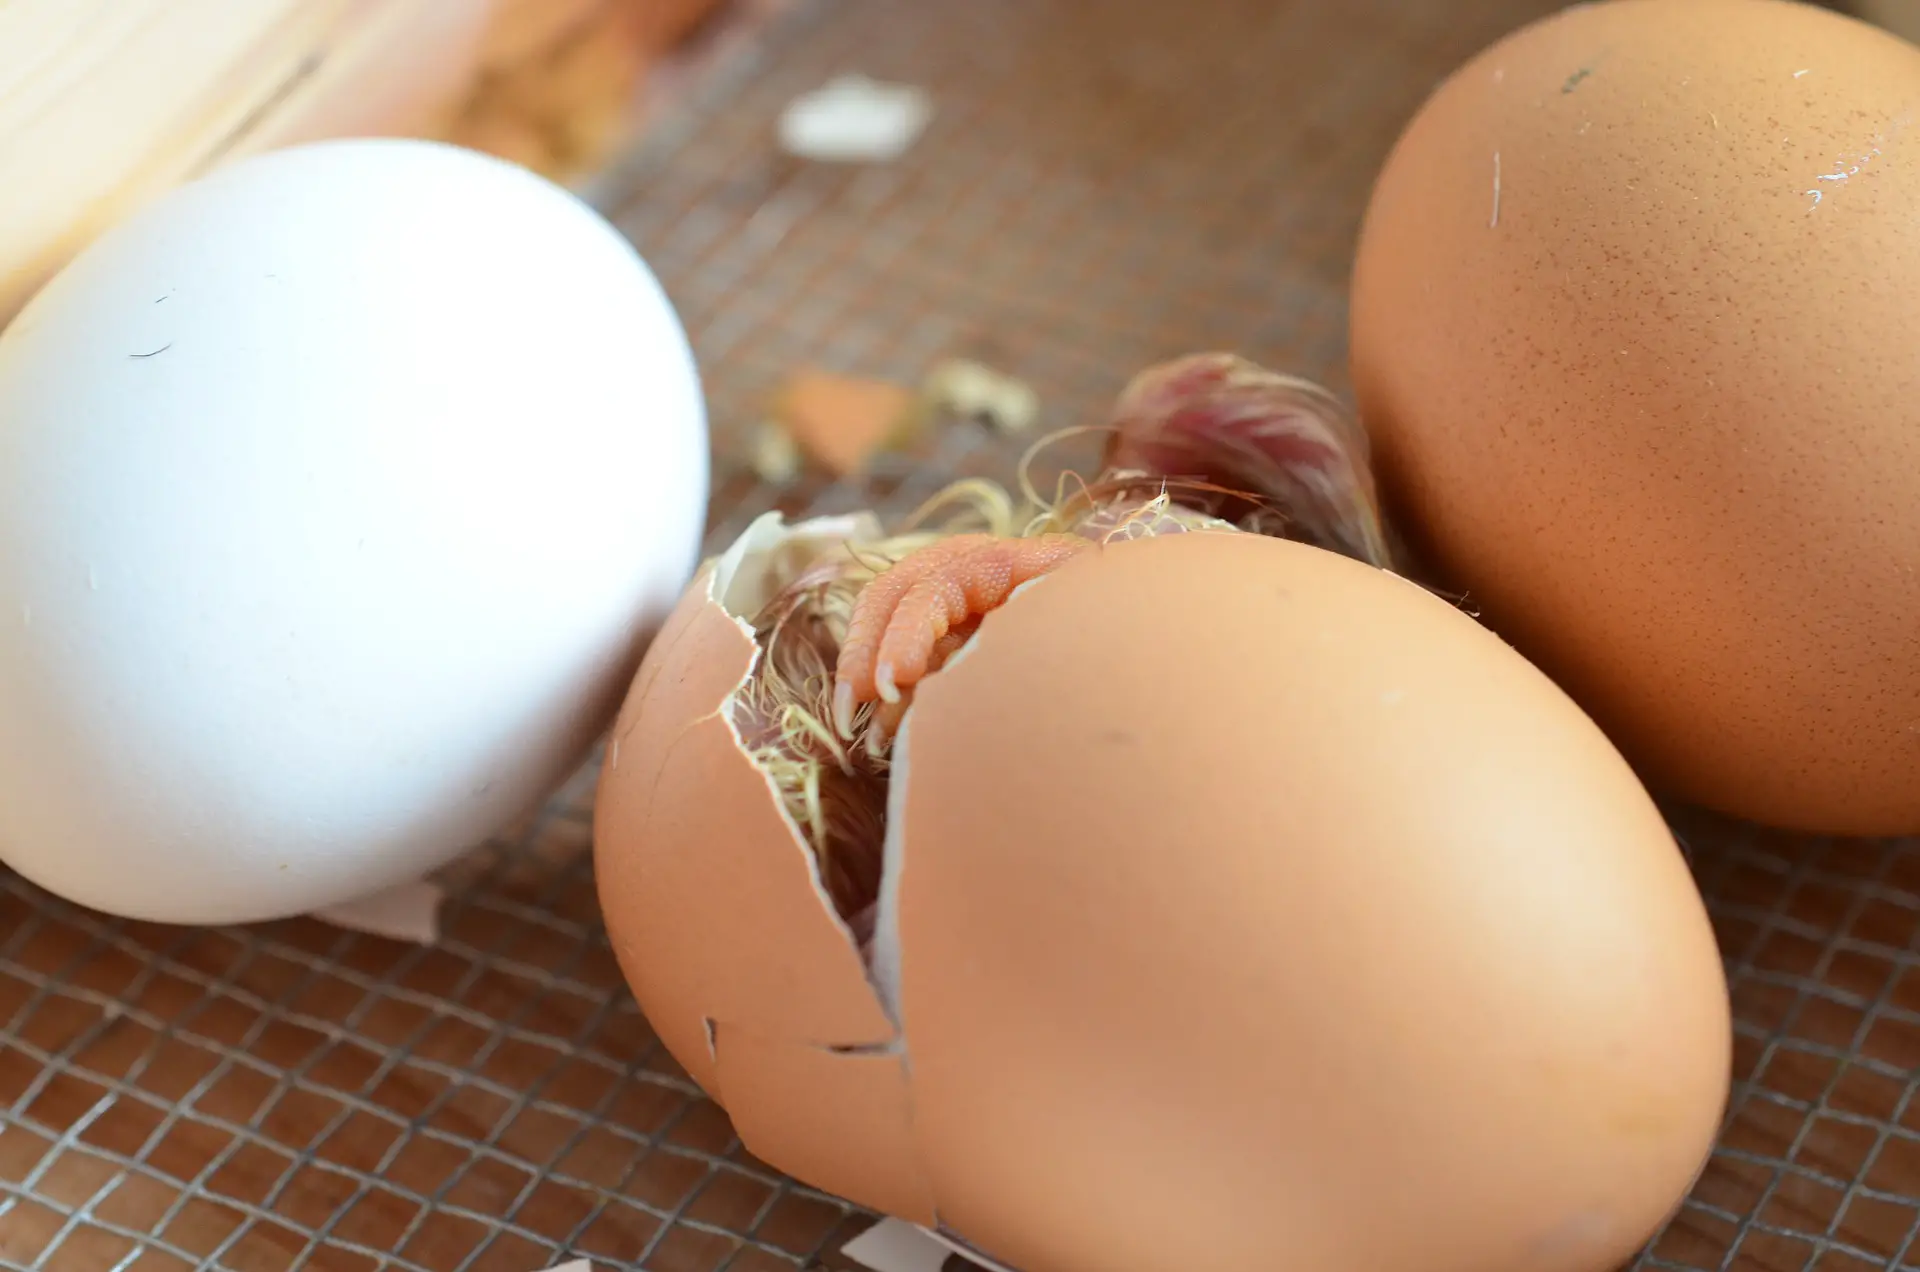 how eggs hatch